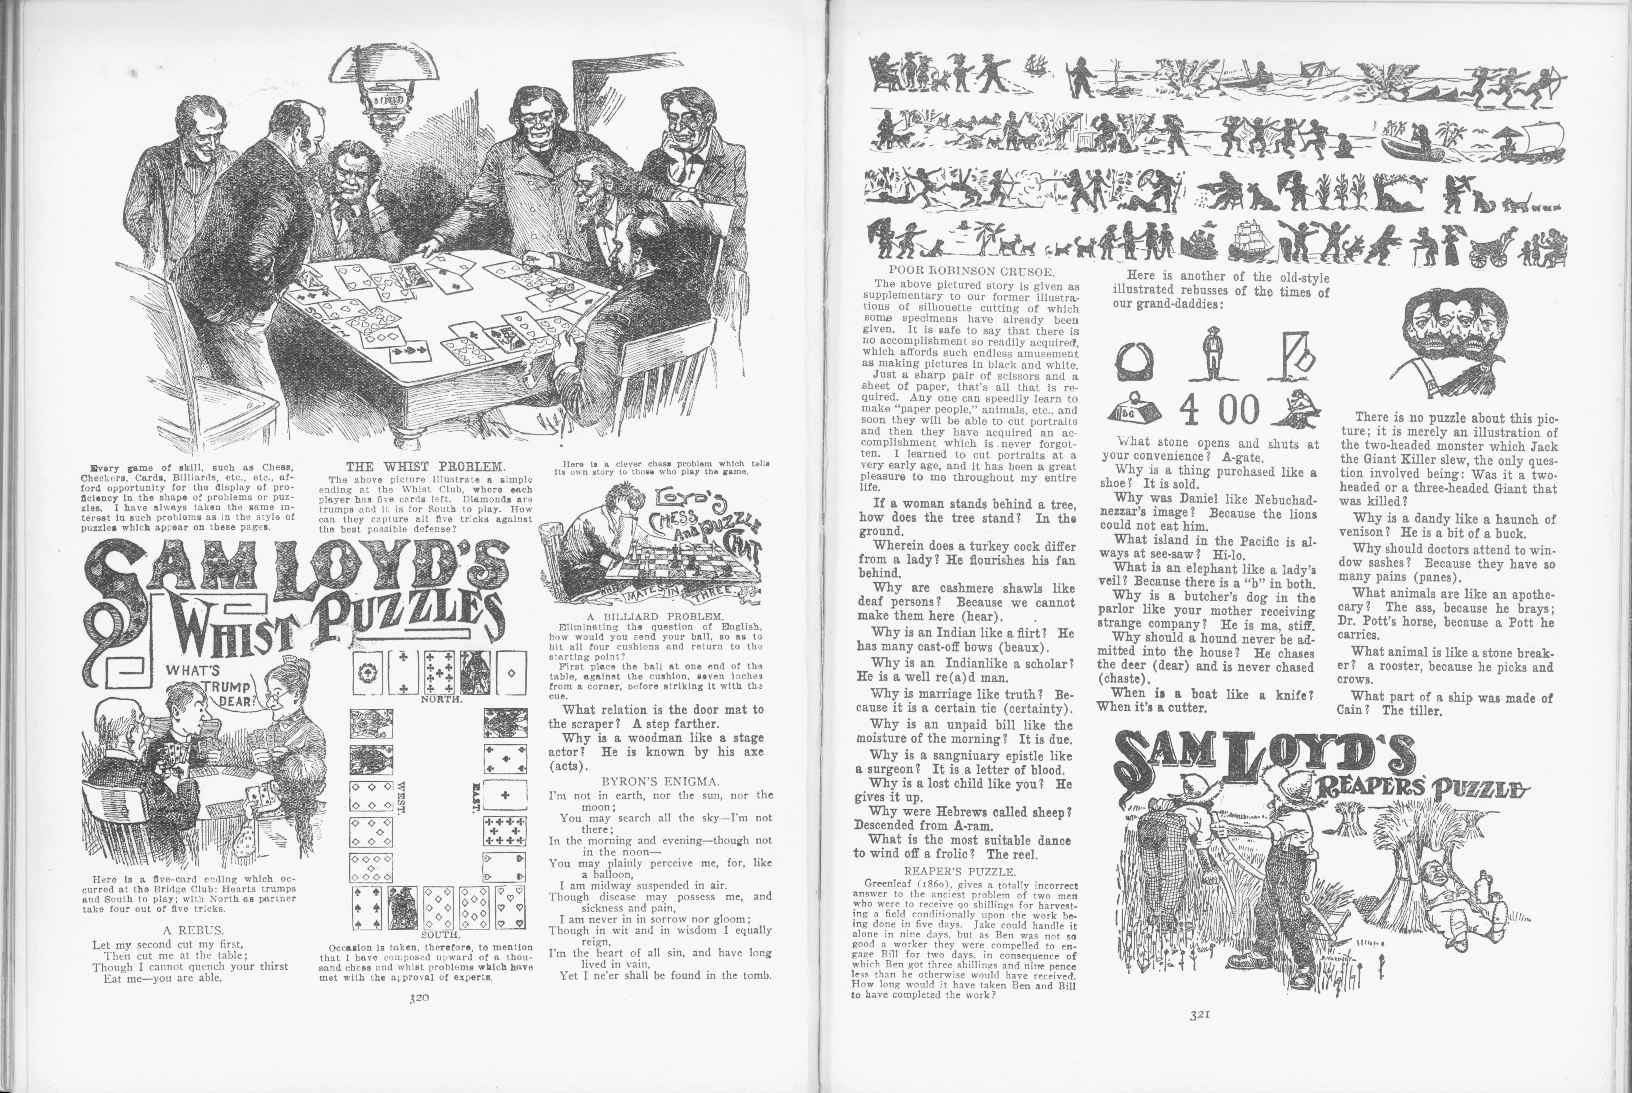 Sam Loyd - Cyclopedia of Puzzles - page 320-321